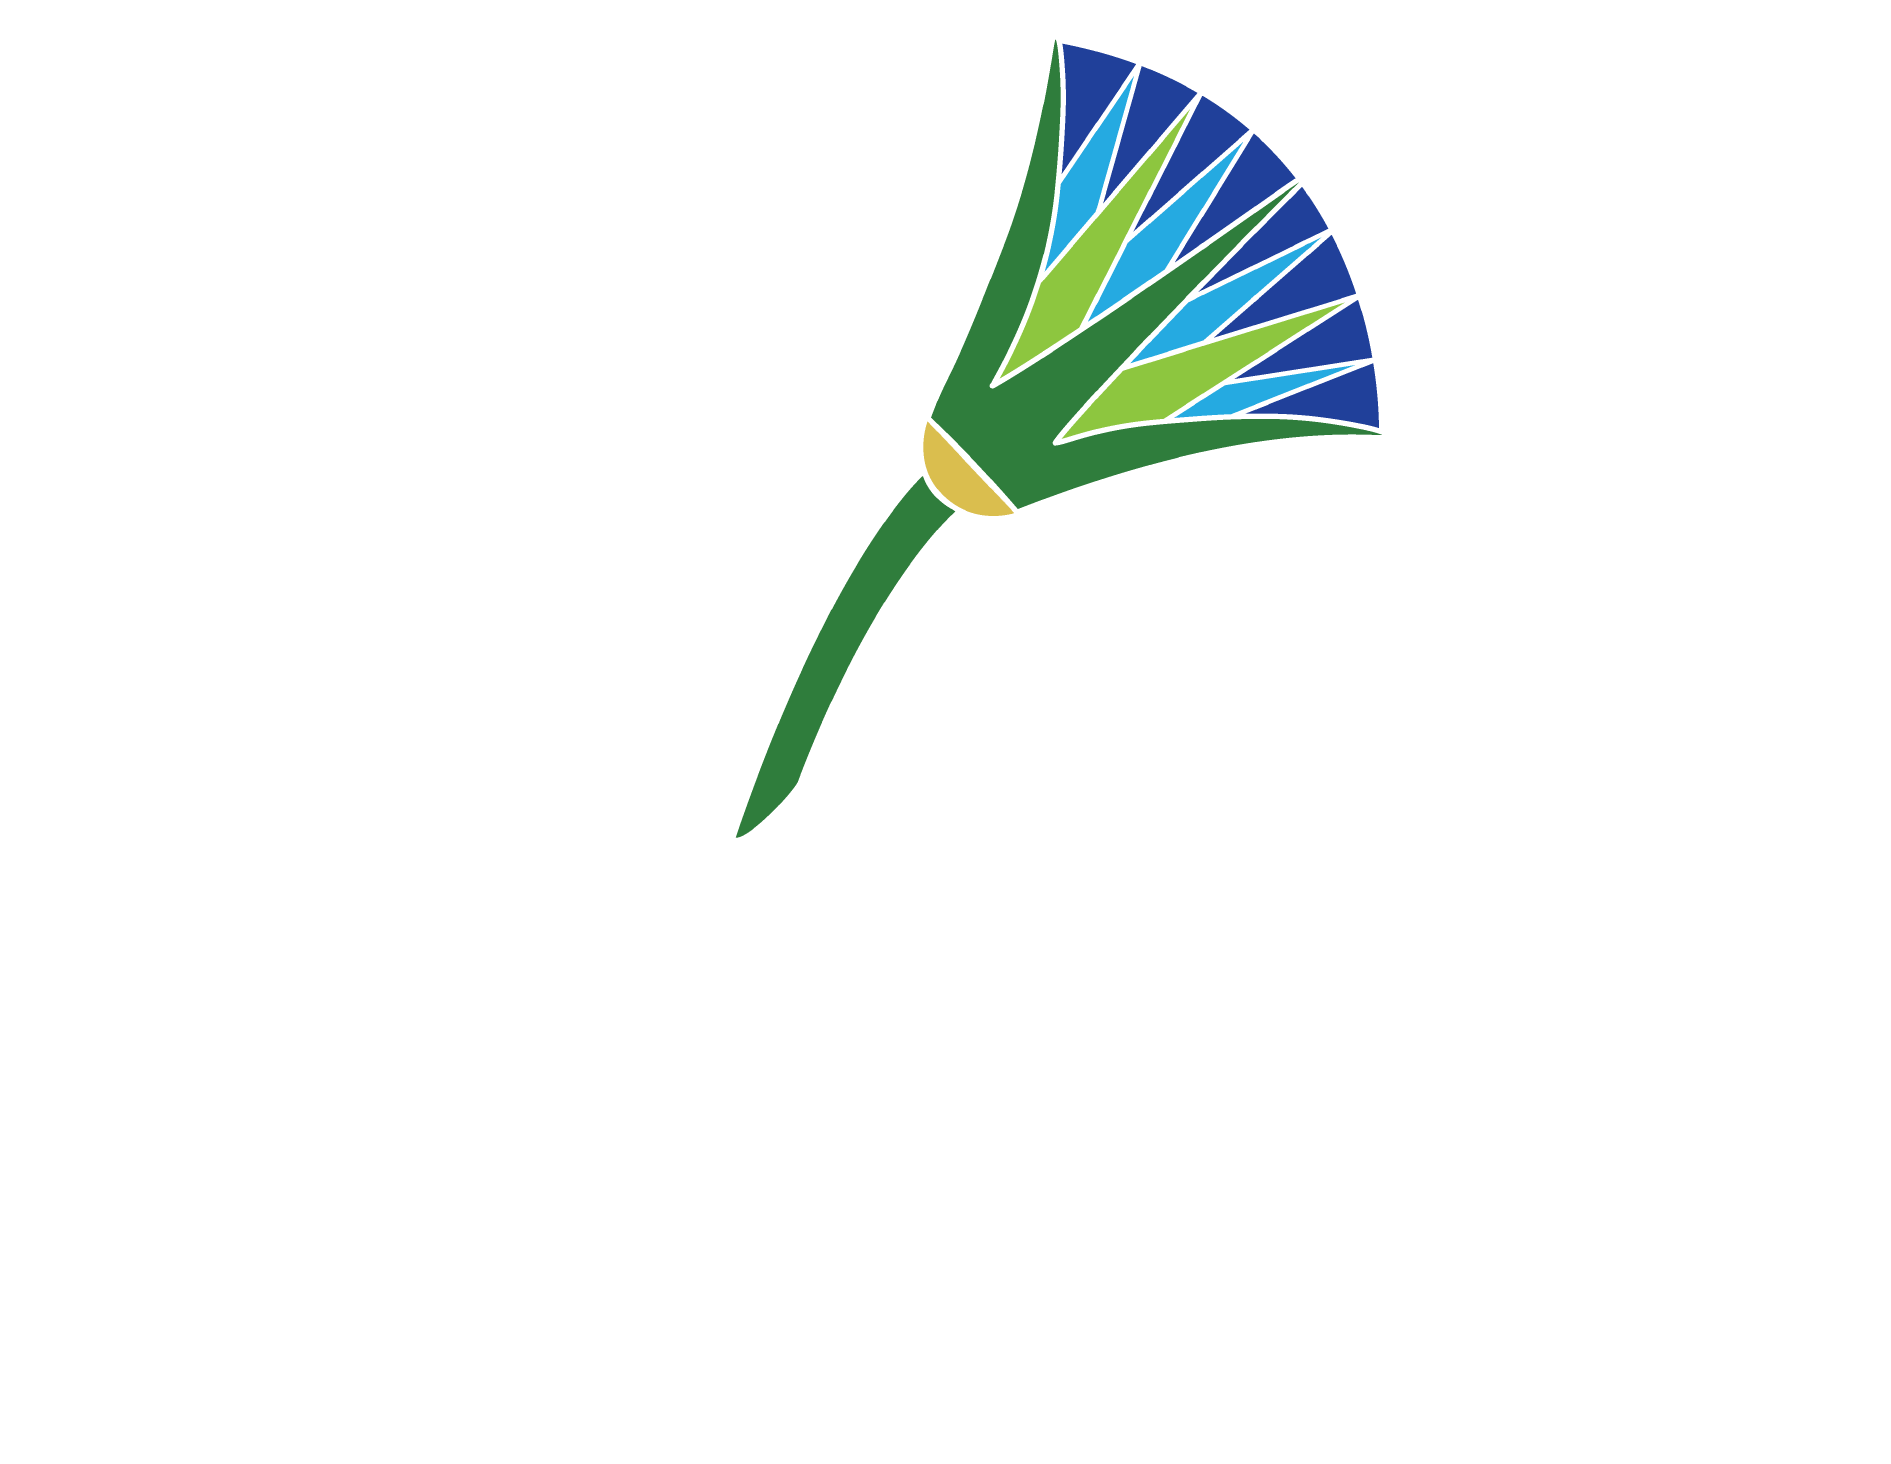 Seahorse Oracle